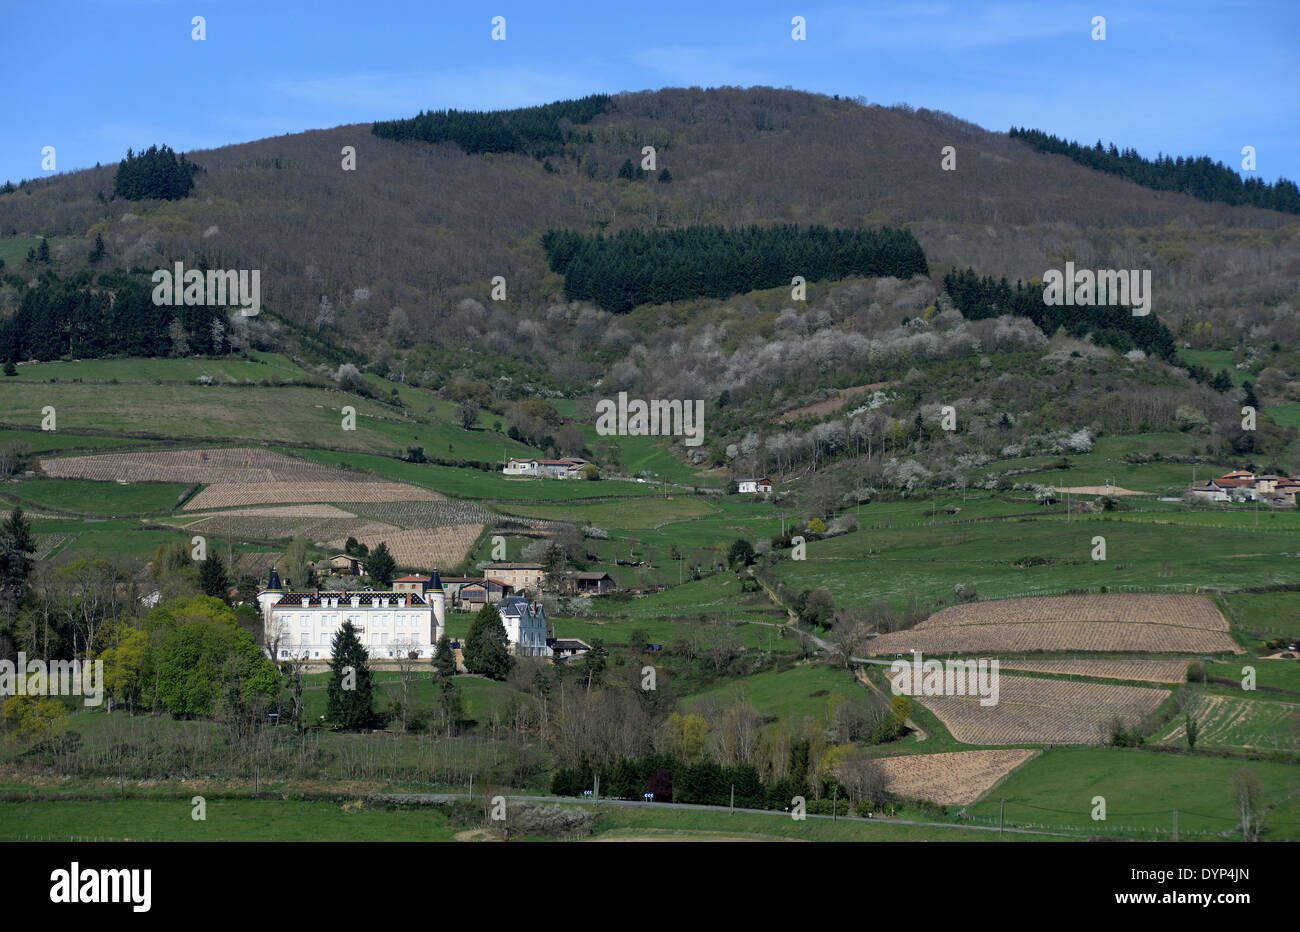 Vineyards of the Beaujolais region of France. Stock Photo